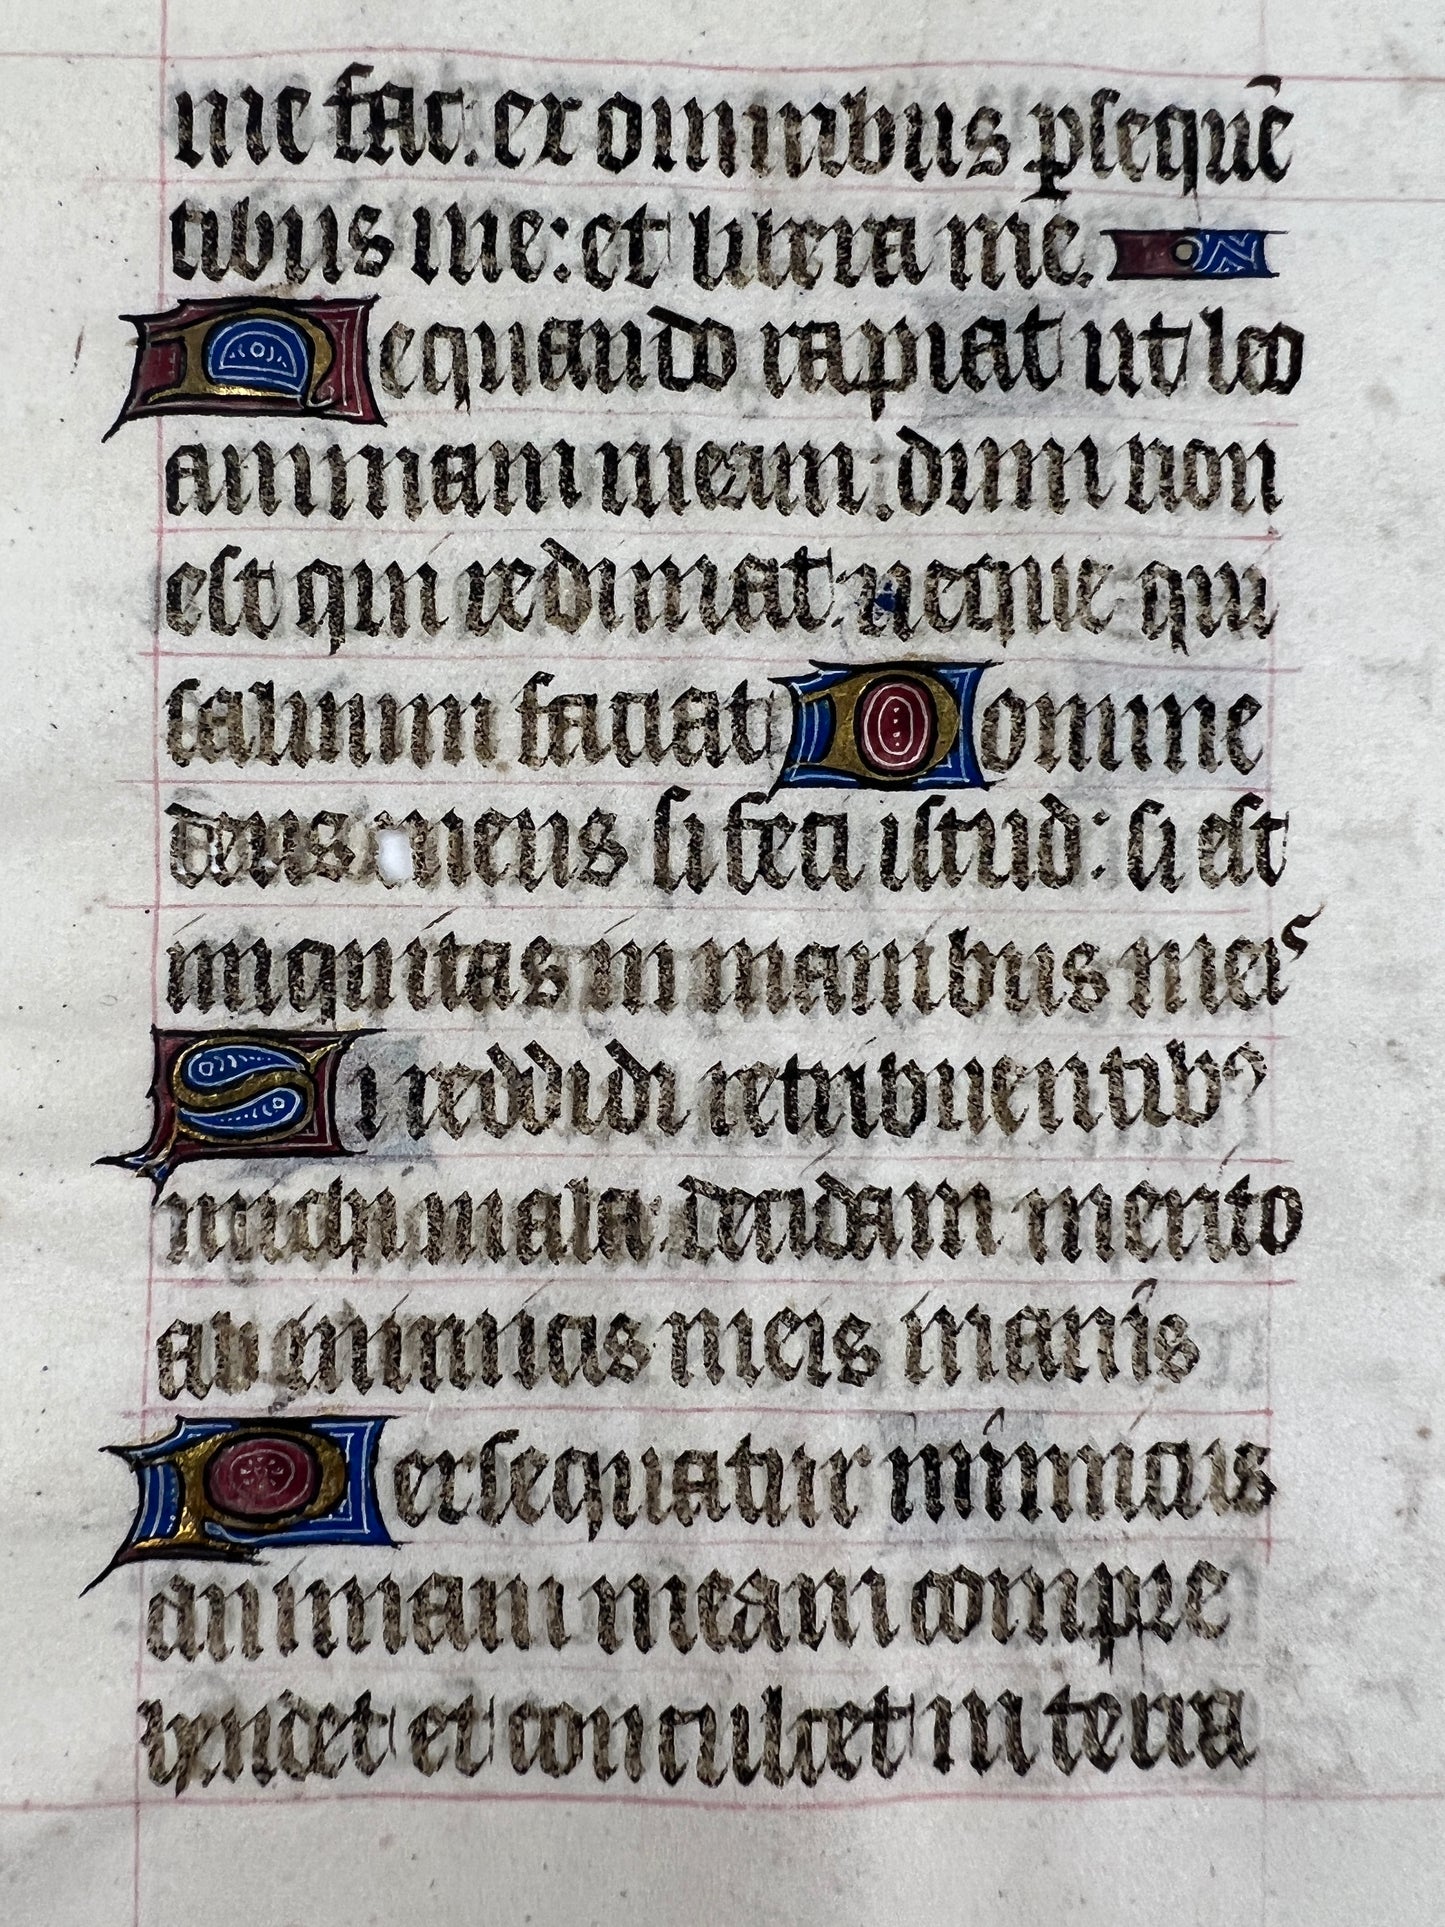 c1450 Illuminated Manuscript Vellum Leaf from a Book of Hours